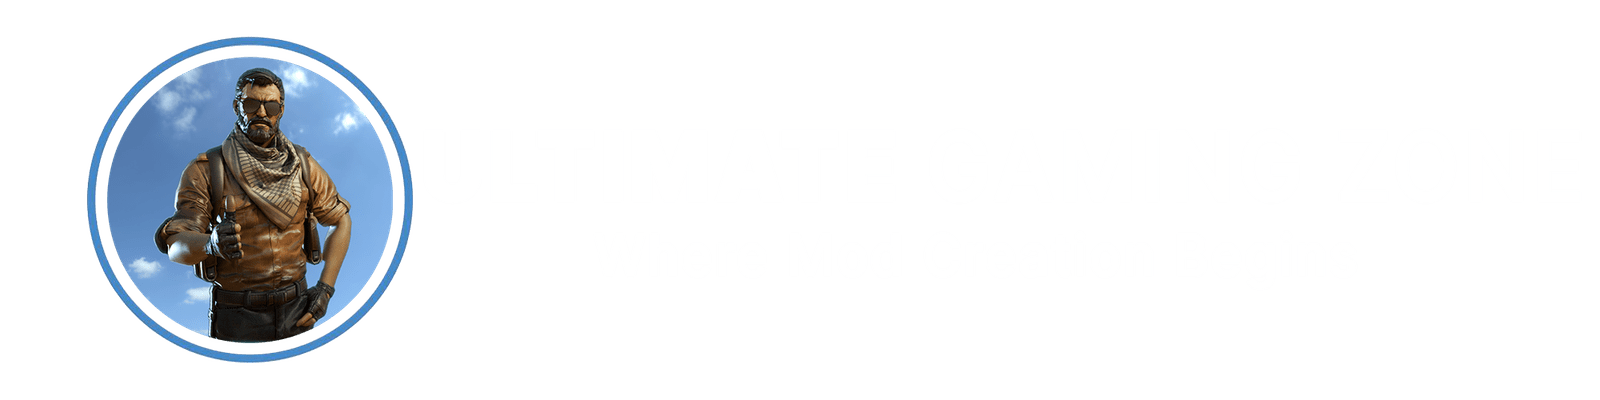 Ultimate Gaming Zone